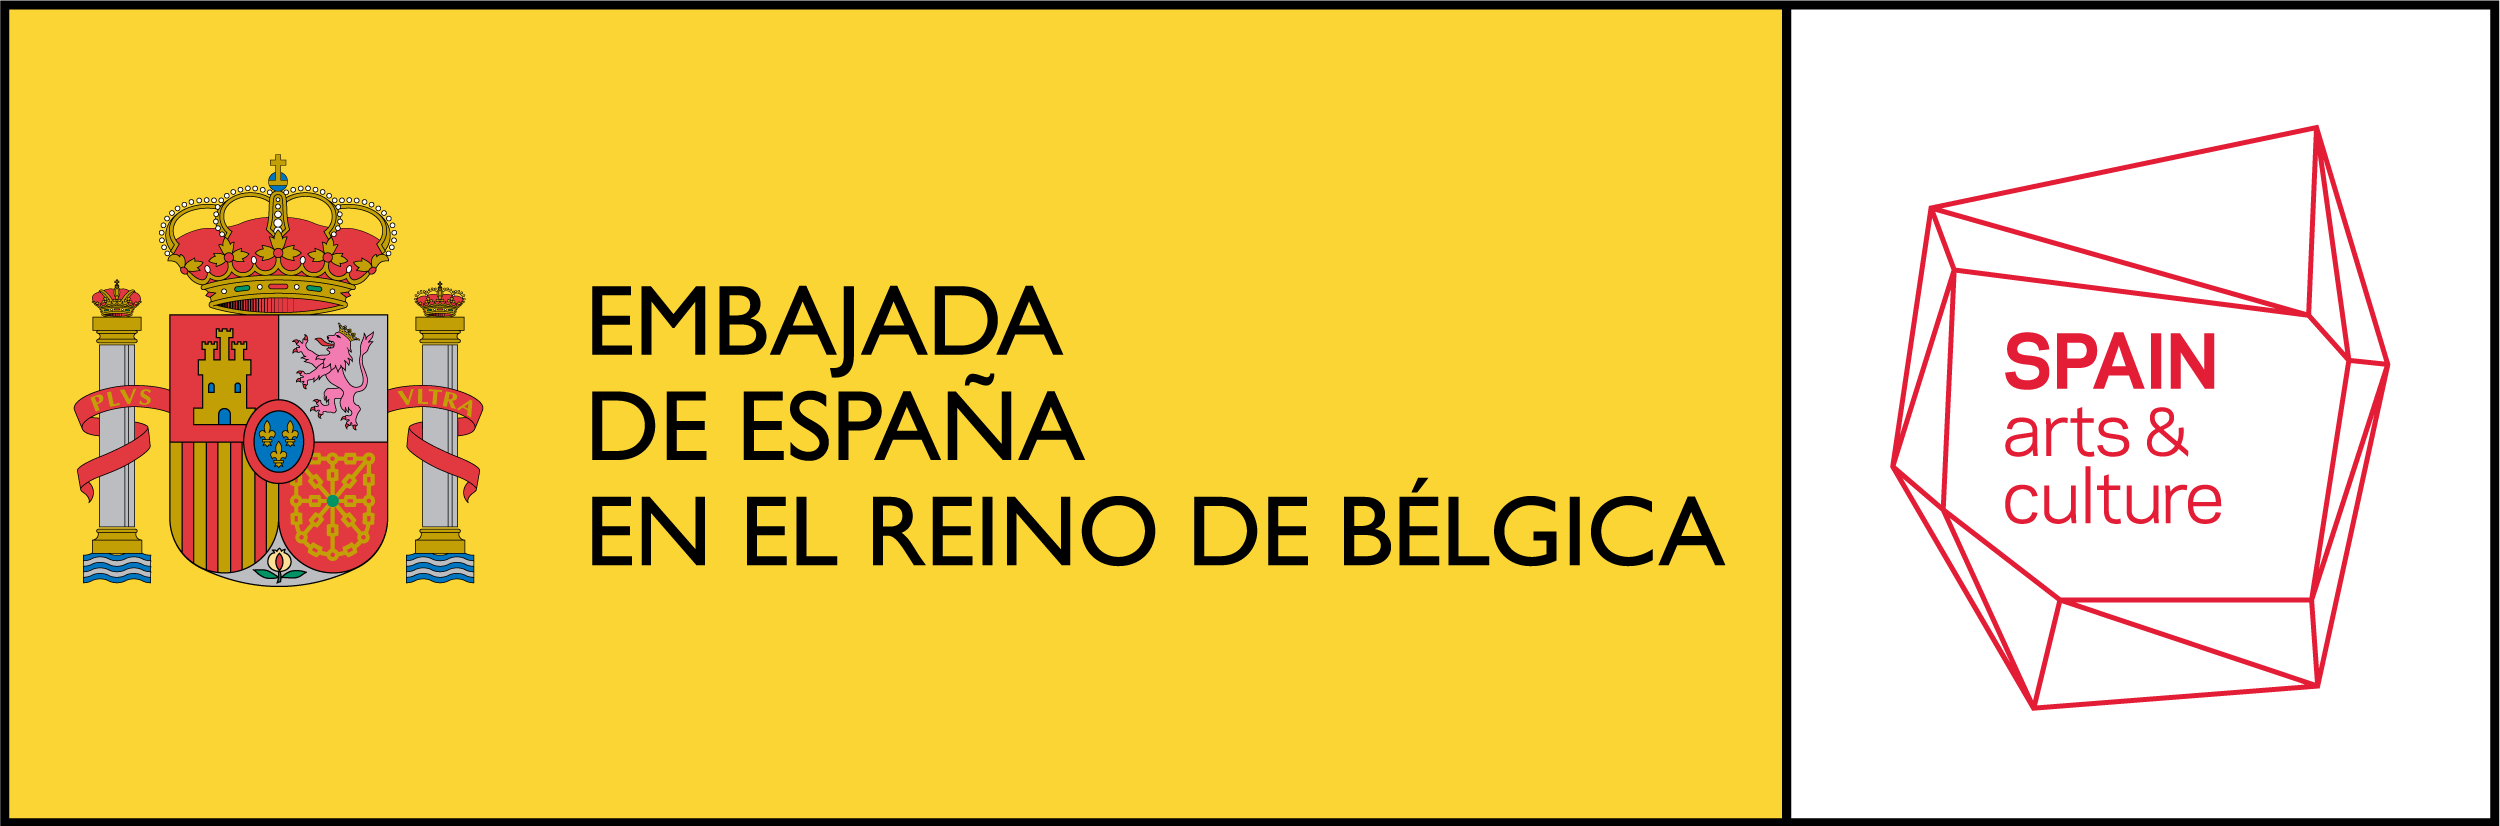 embajada-espana-belgica-color.png